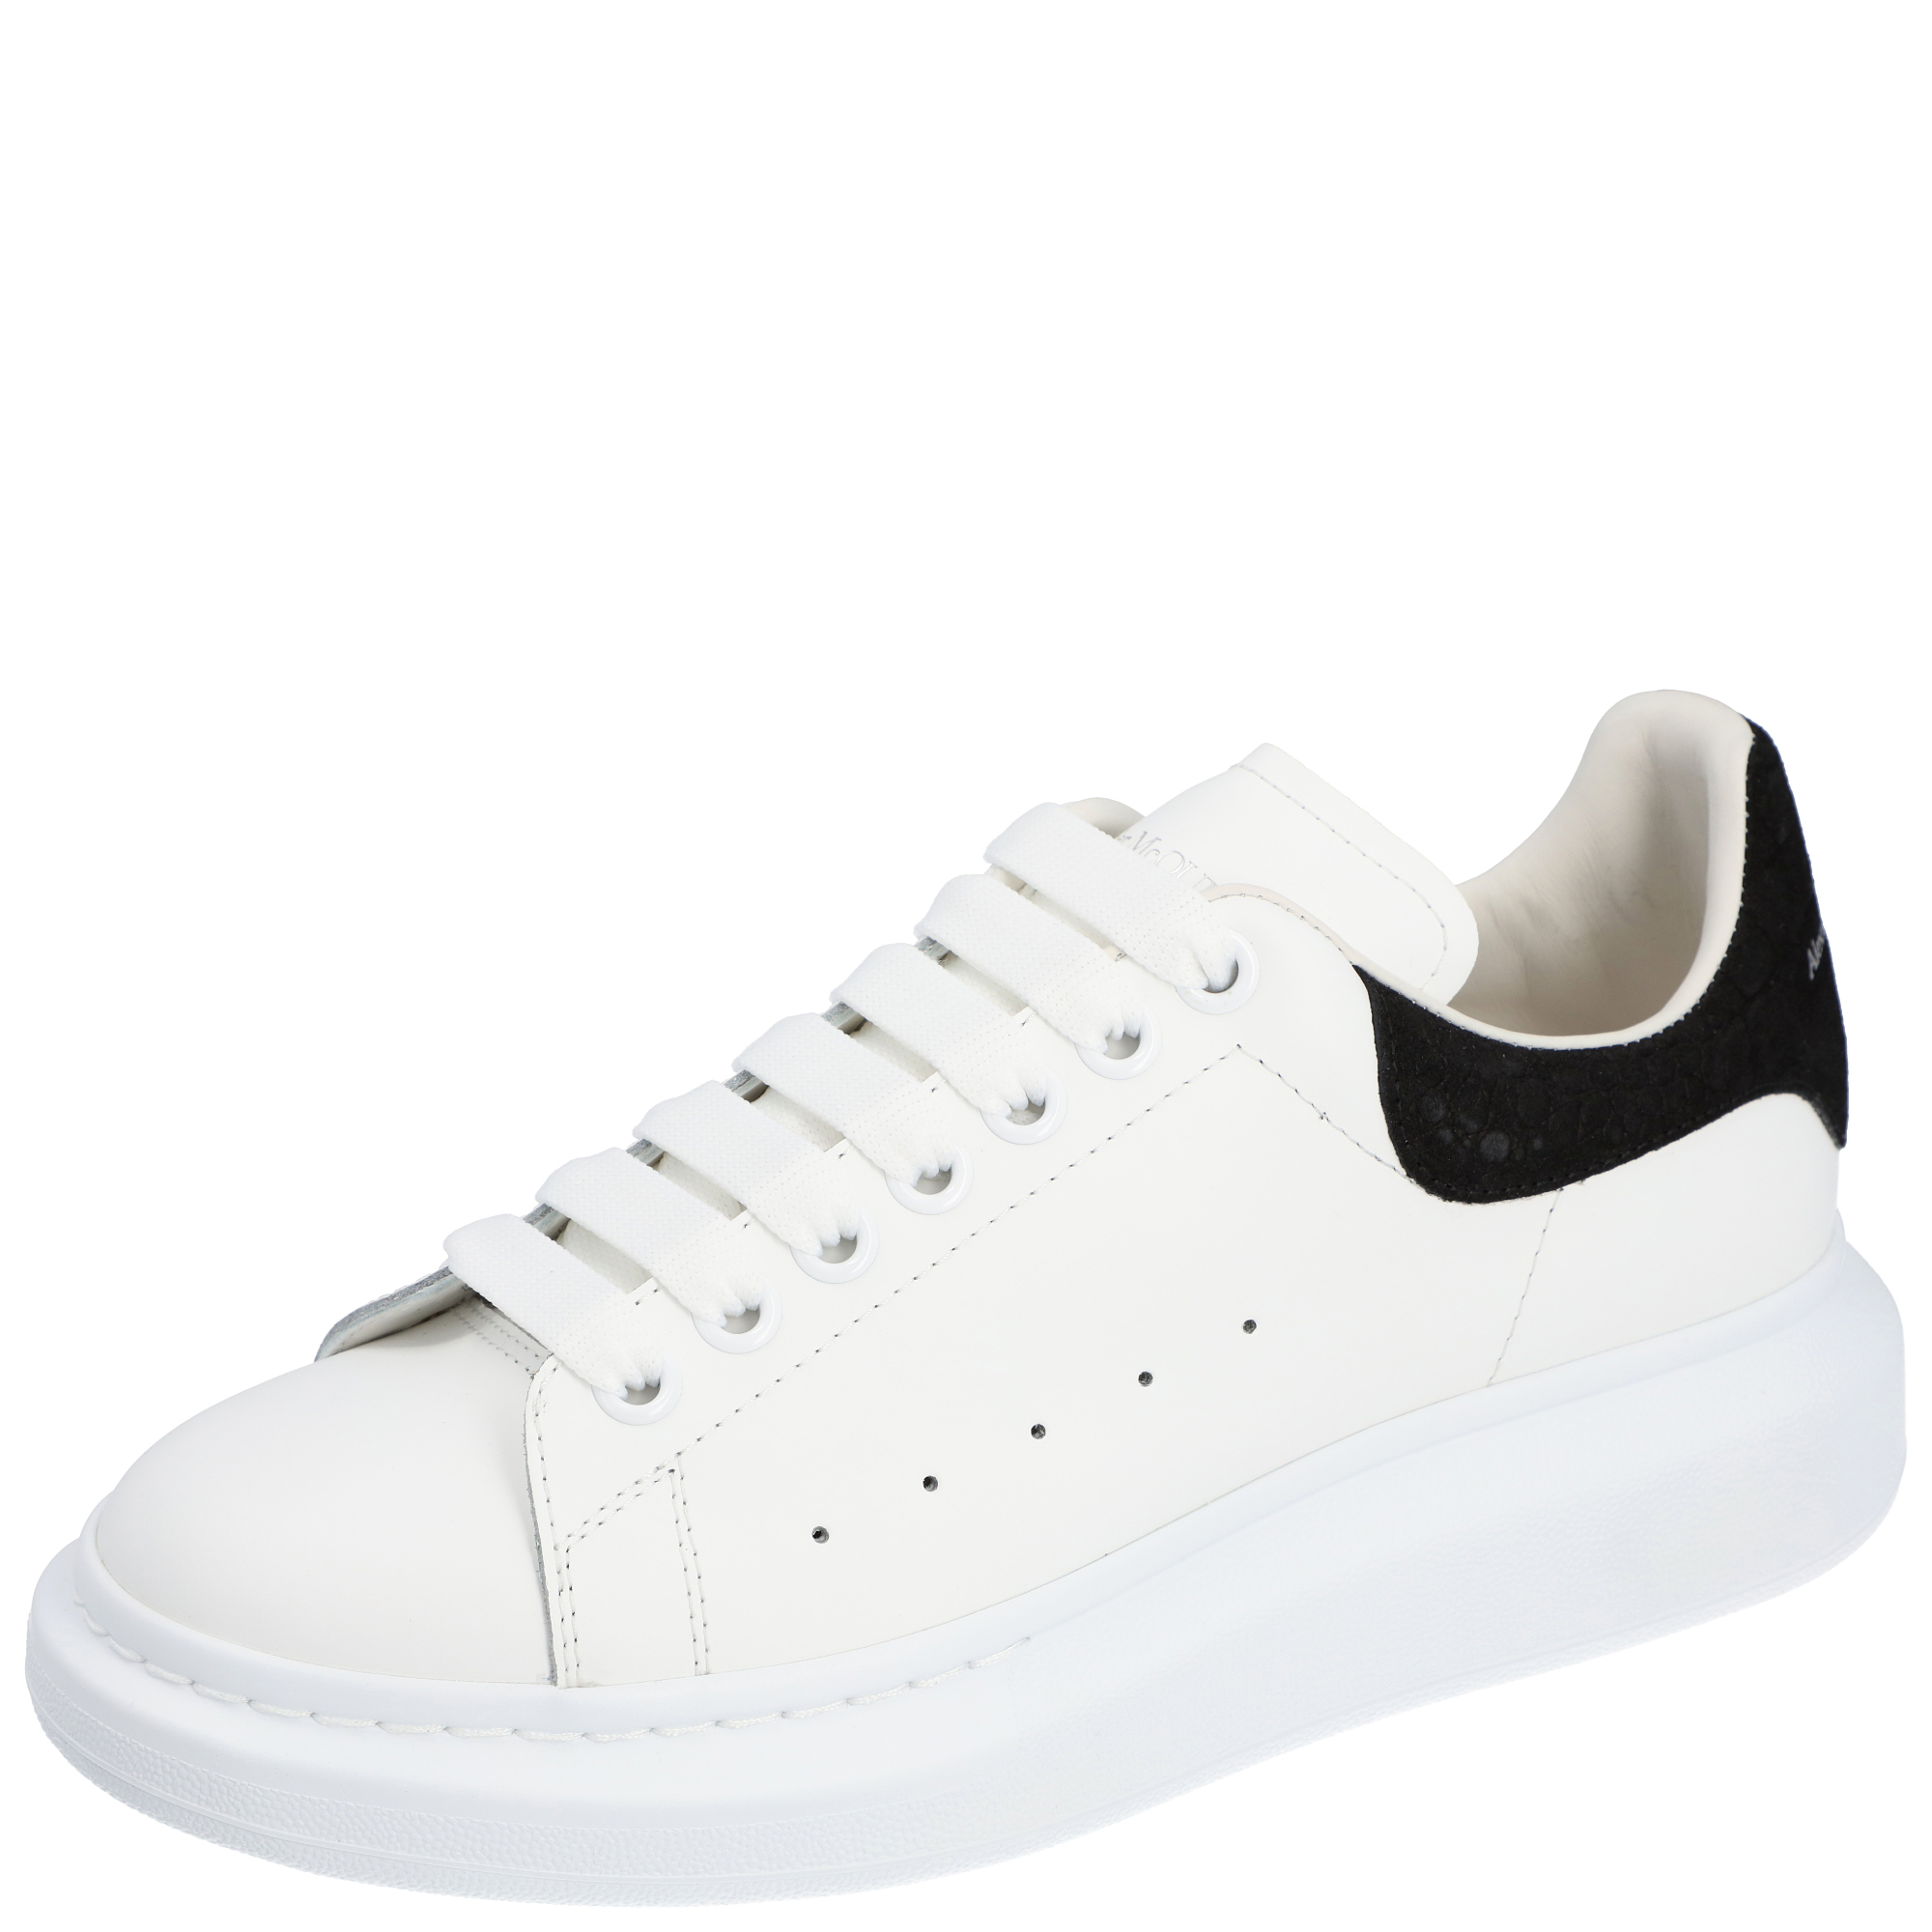 Alexander McQueen White/Black Leather Oversized Sneakers EU 40